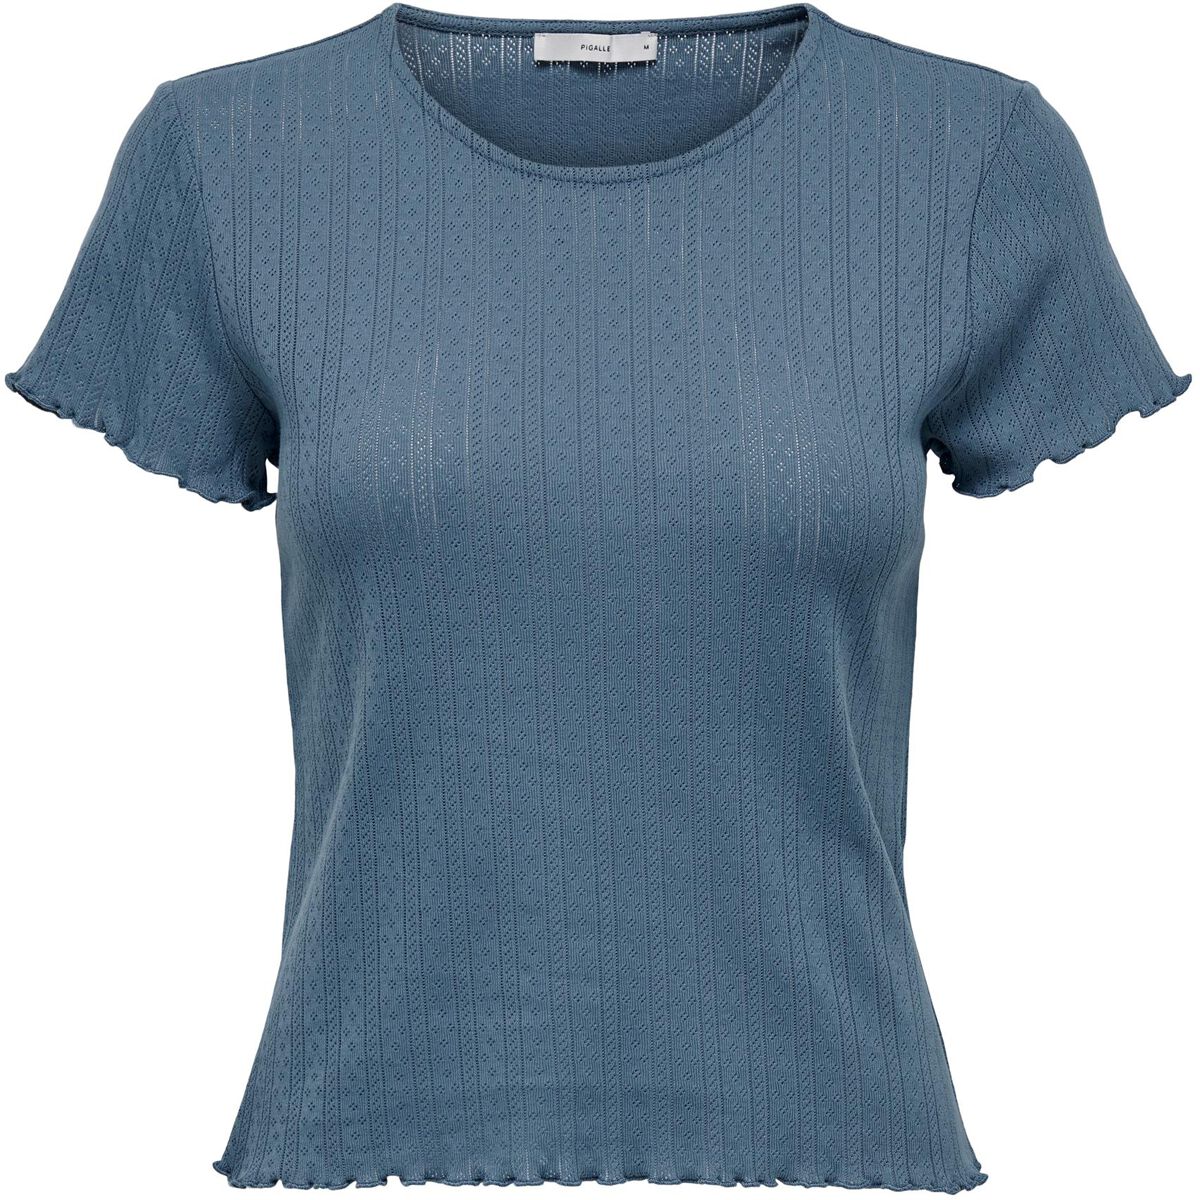 Only Onlcarlotta S/S Top T-Shirt blau in S